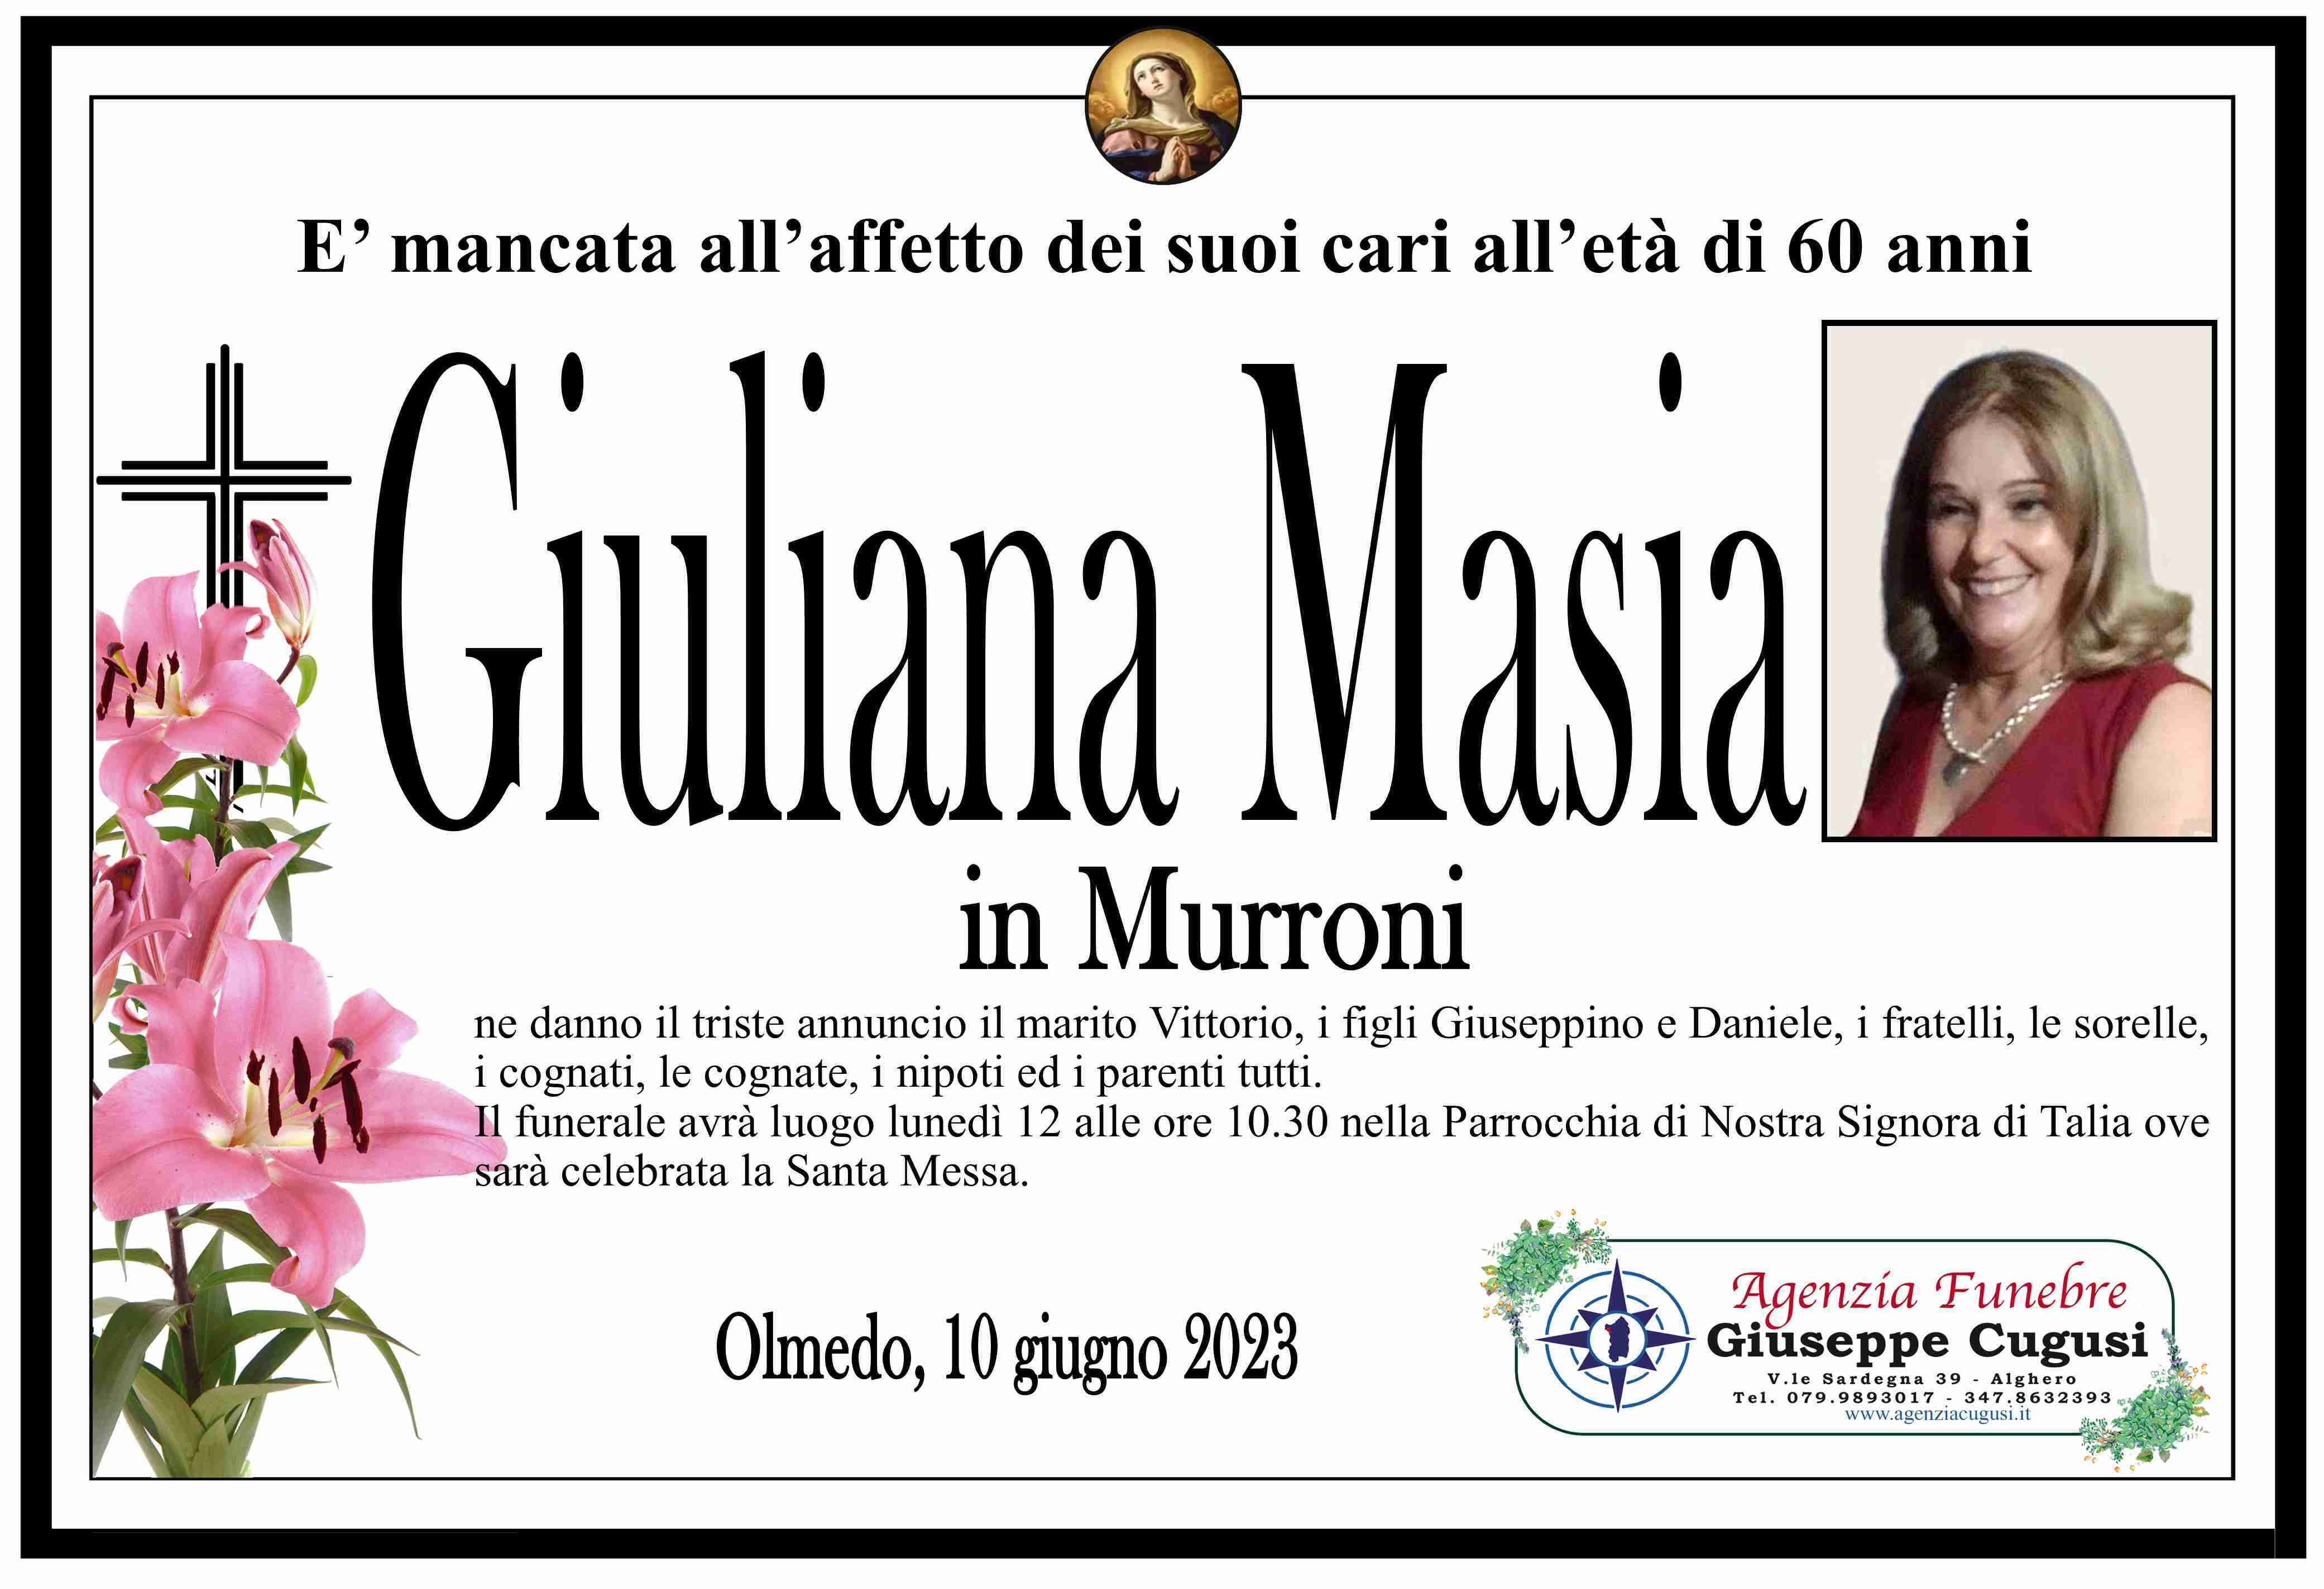 Giuliana Masia